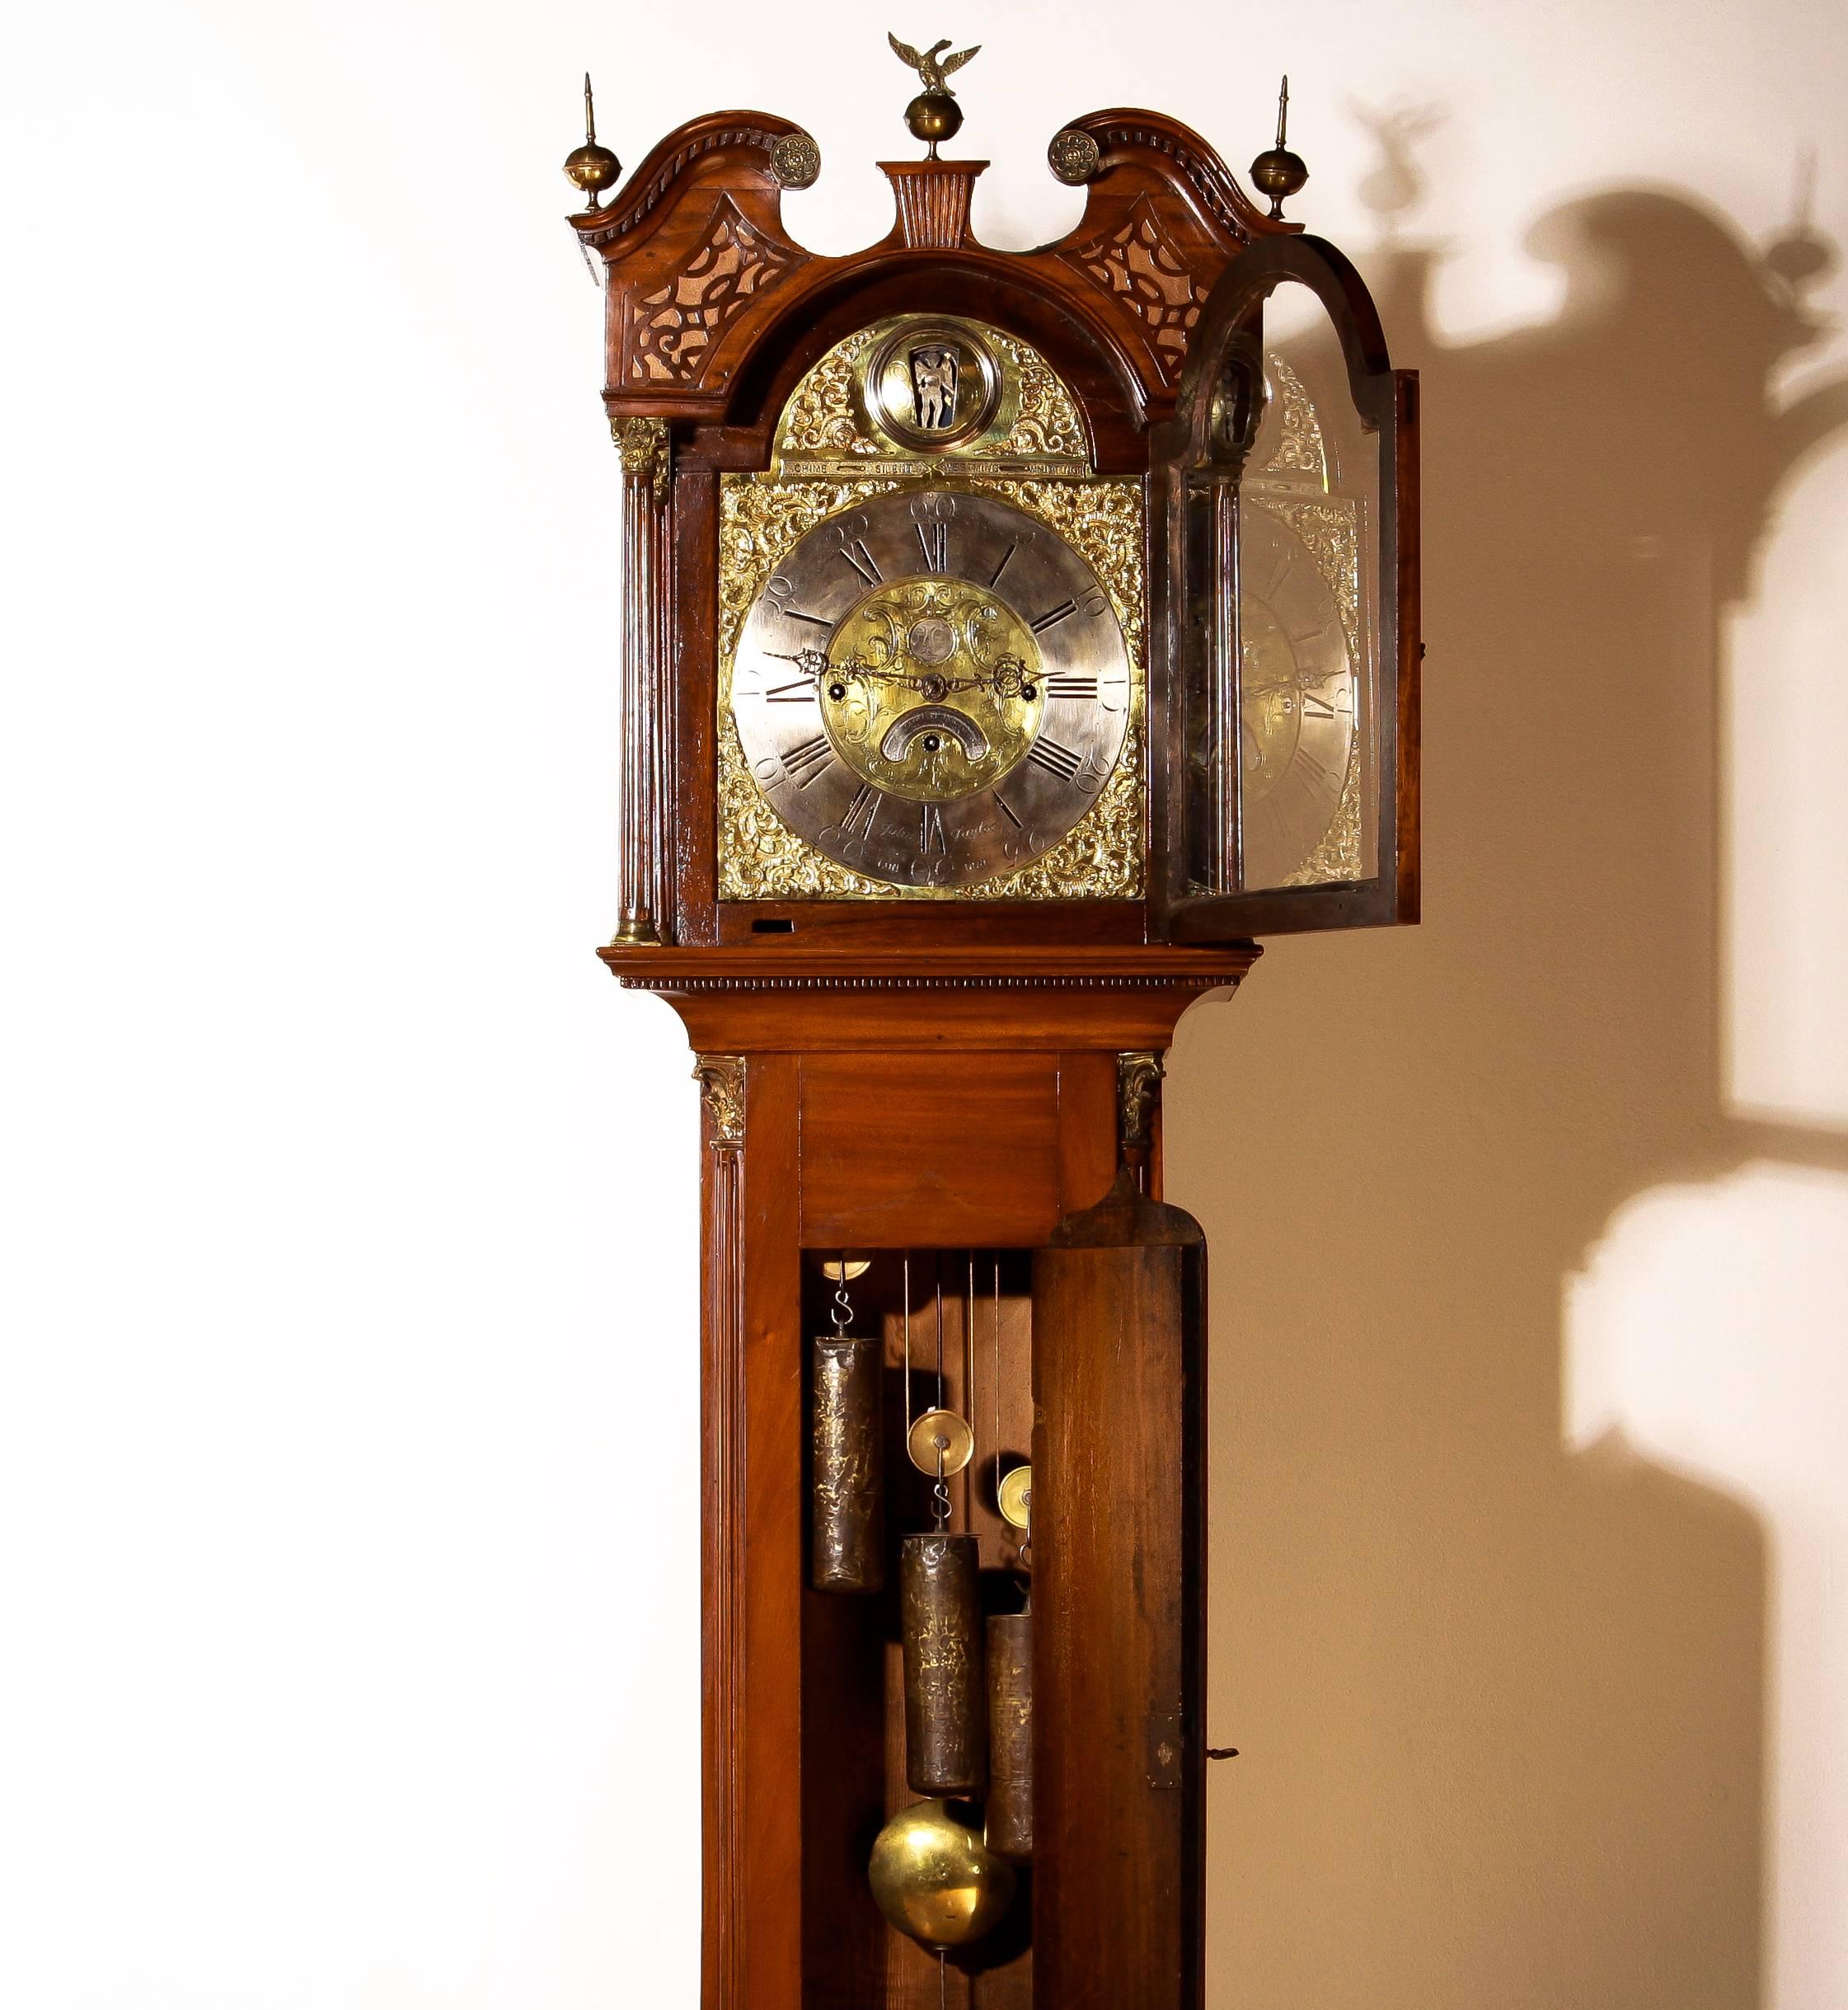 British 18th Century, John Taylor, London Shimming, Musical Longcase Clock in Mahogany